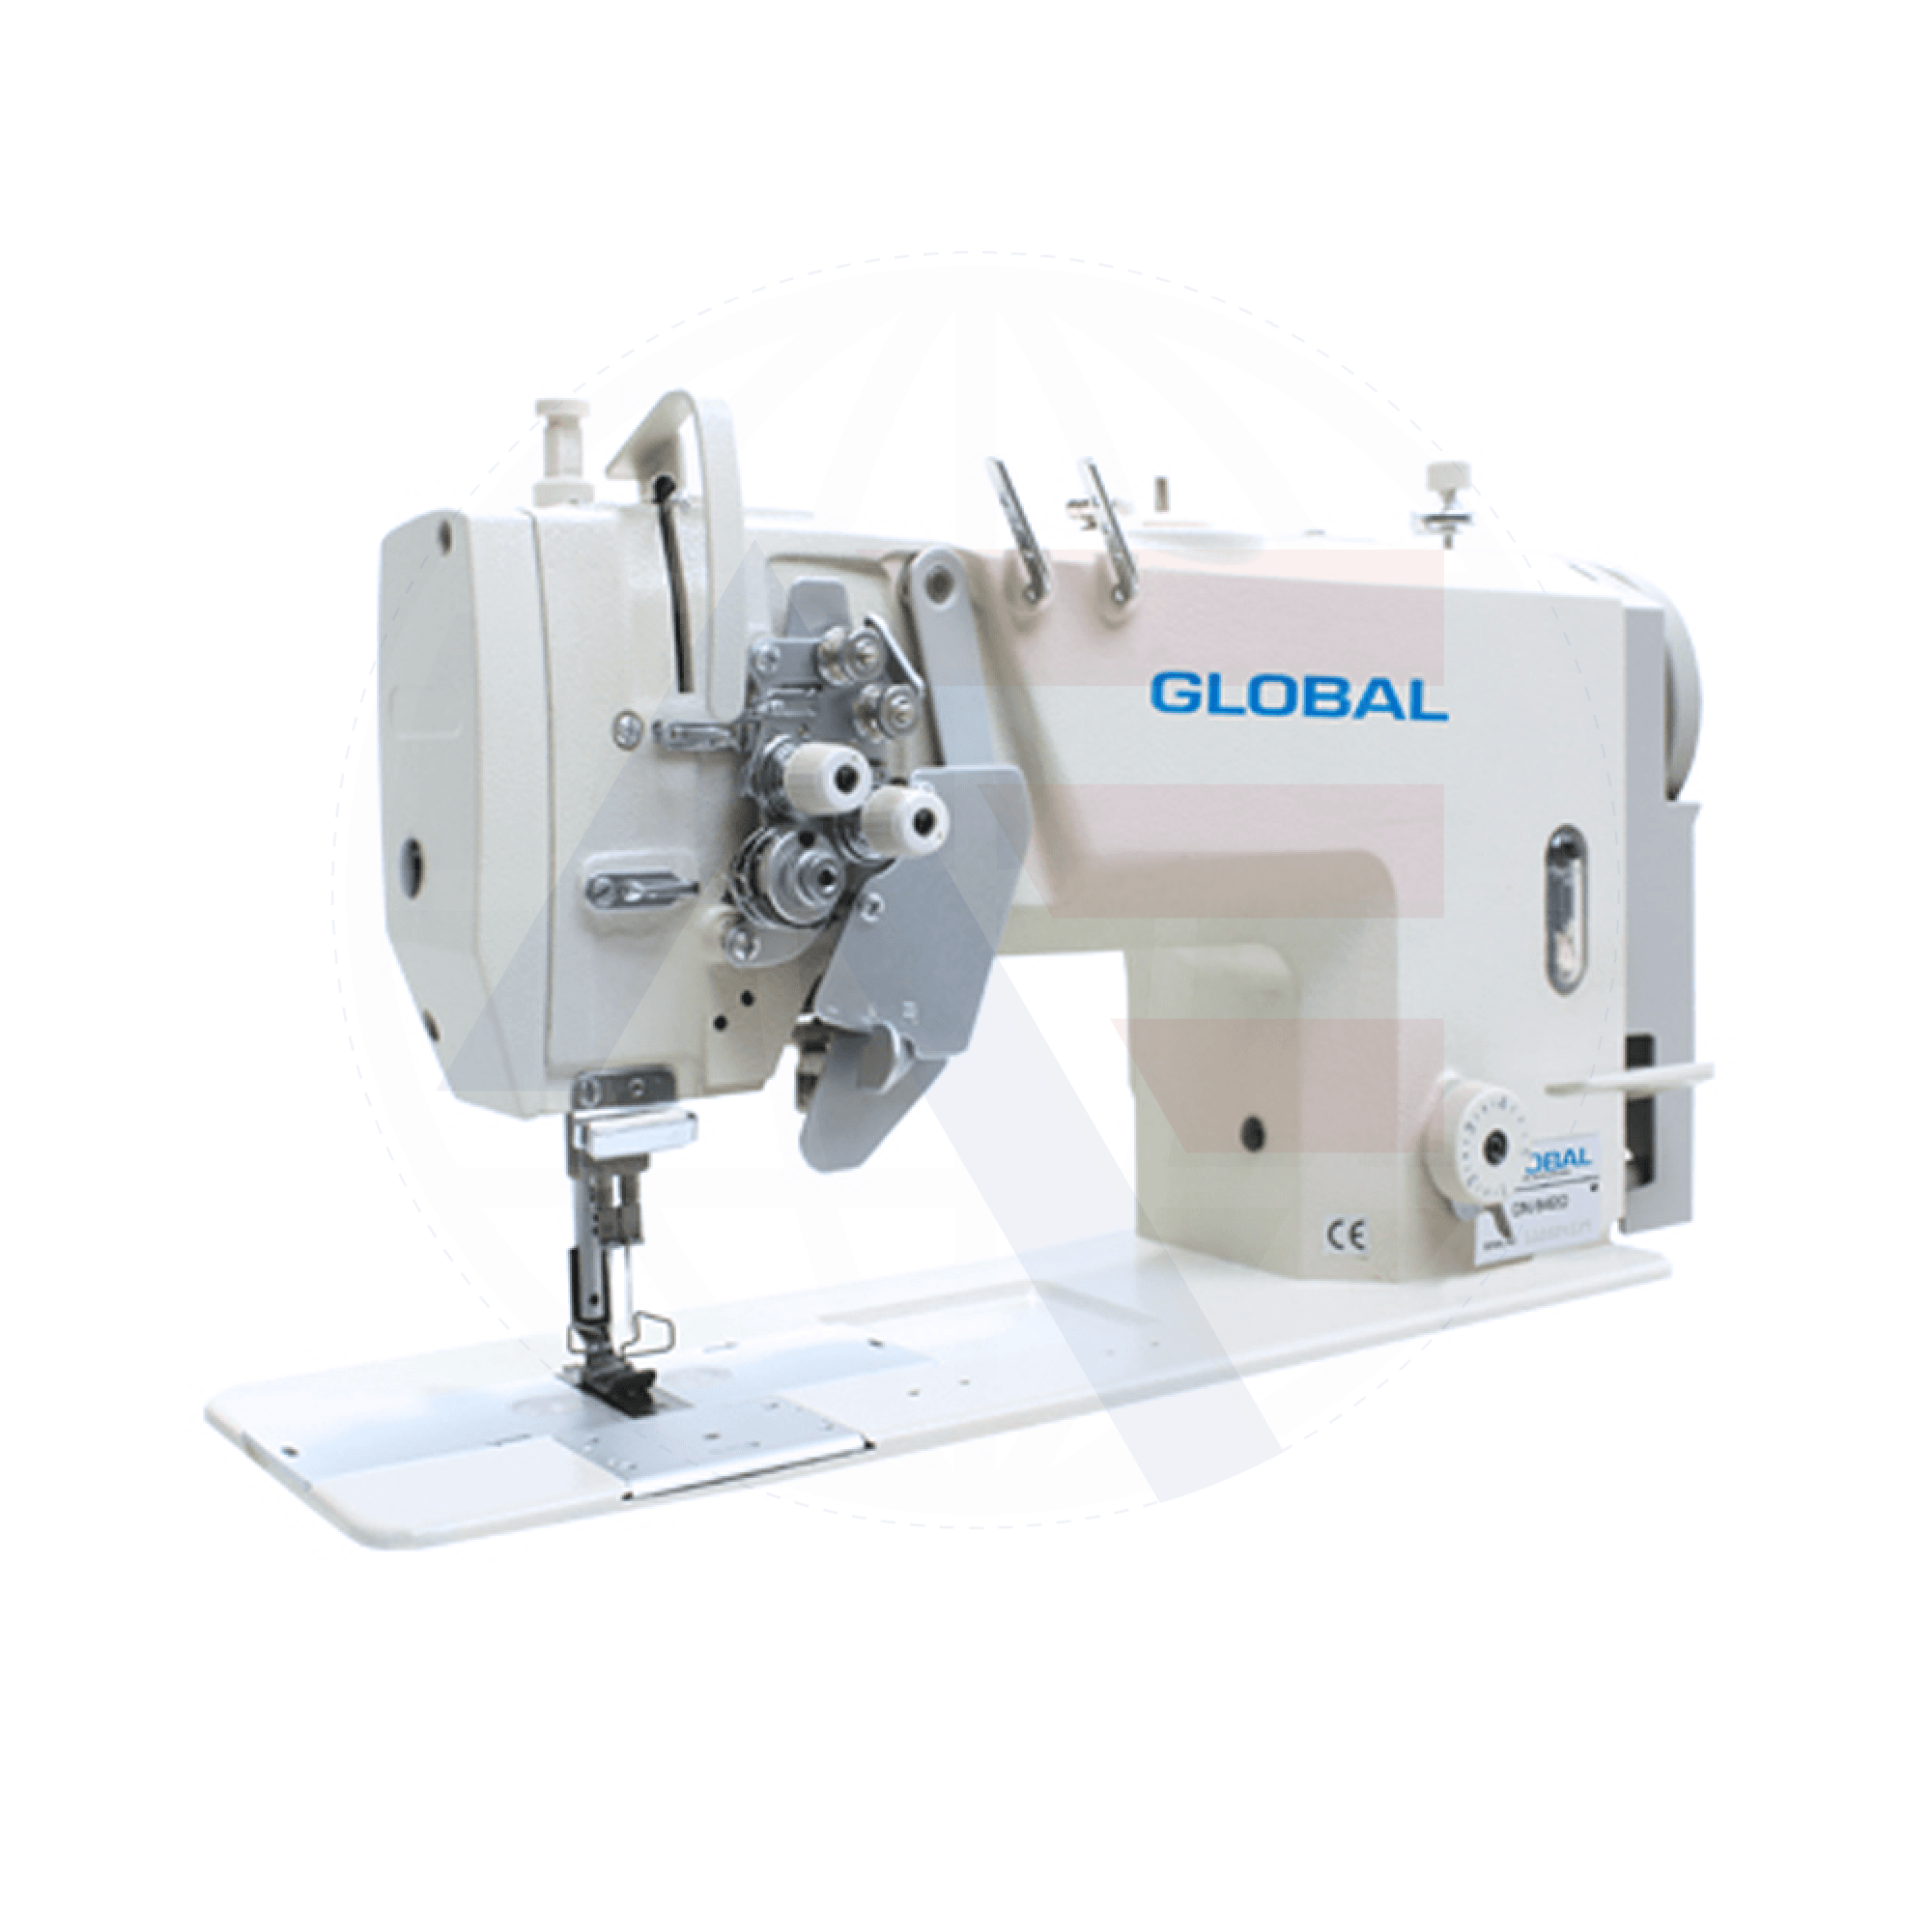 Global Dn 8400 Series 2-Needle Lockstitch Machine Sewing Machines